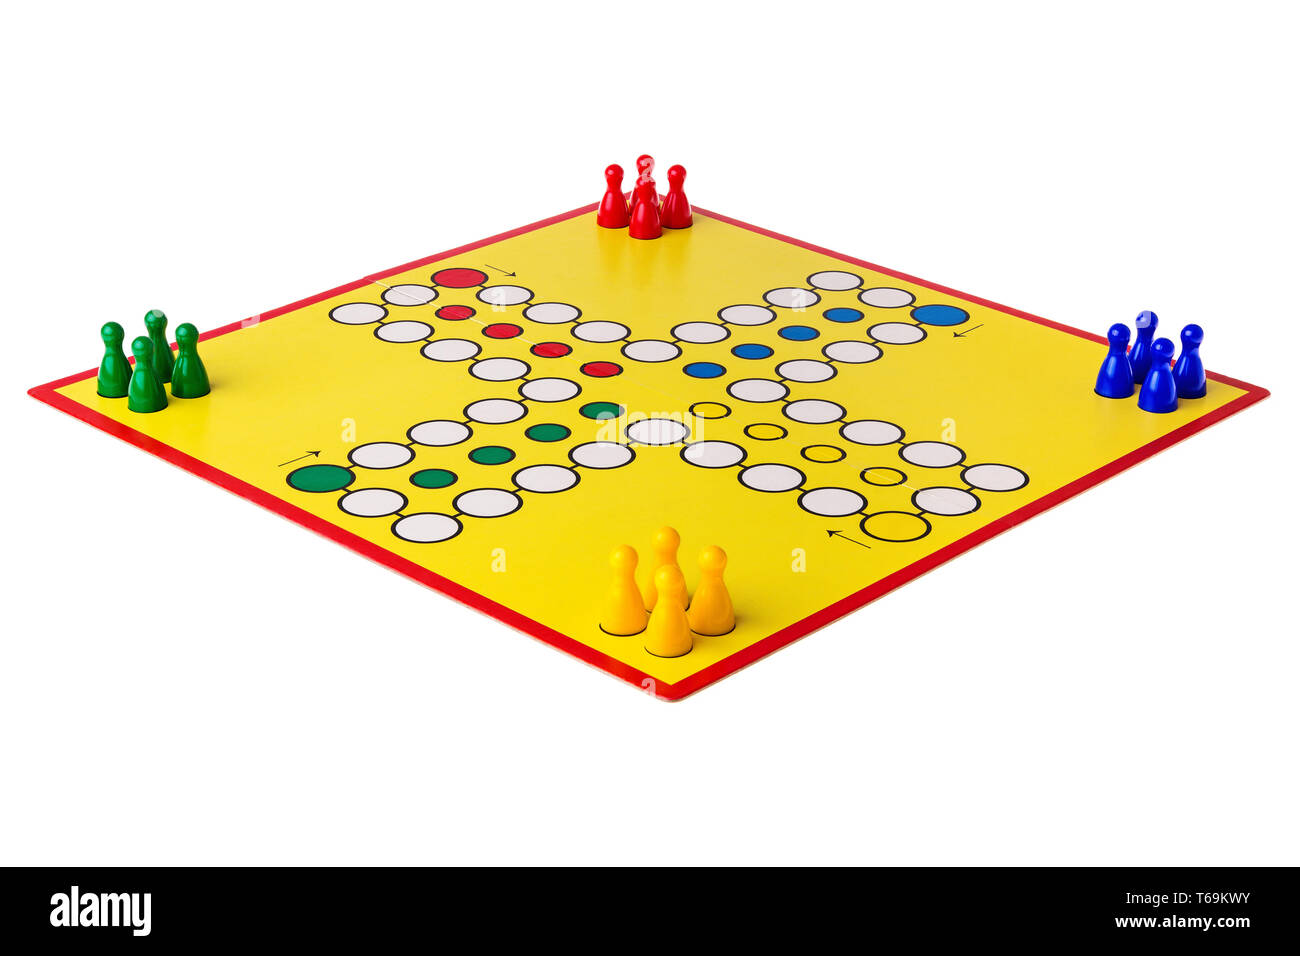 Ludo boardgame arranged on a white background Stock Photo - Alamy